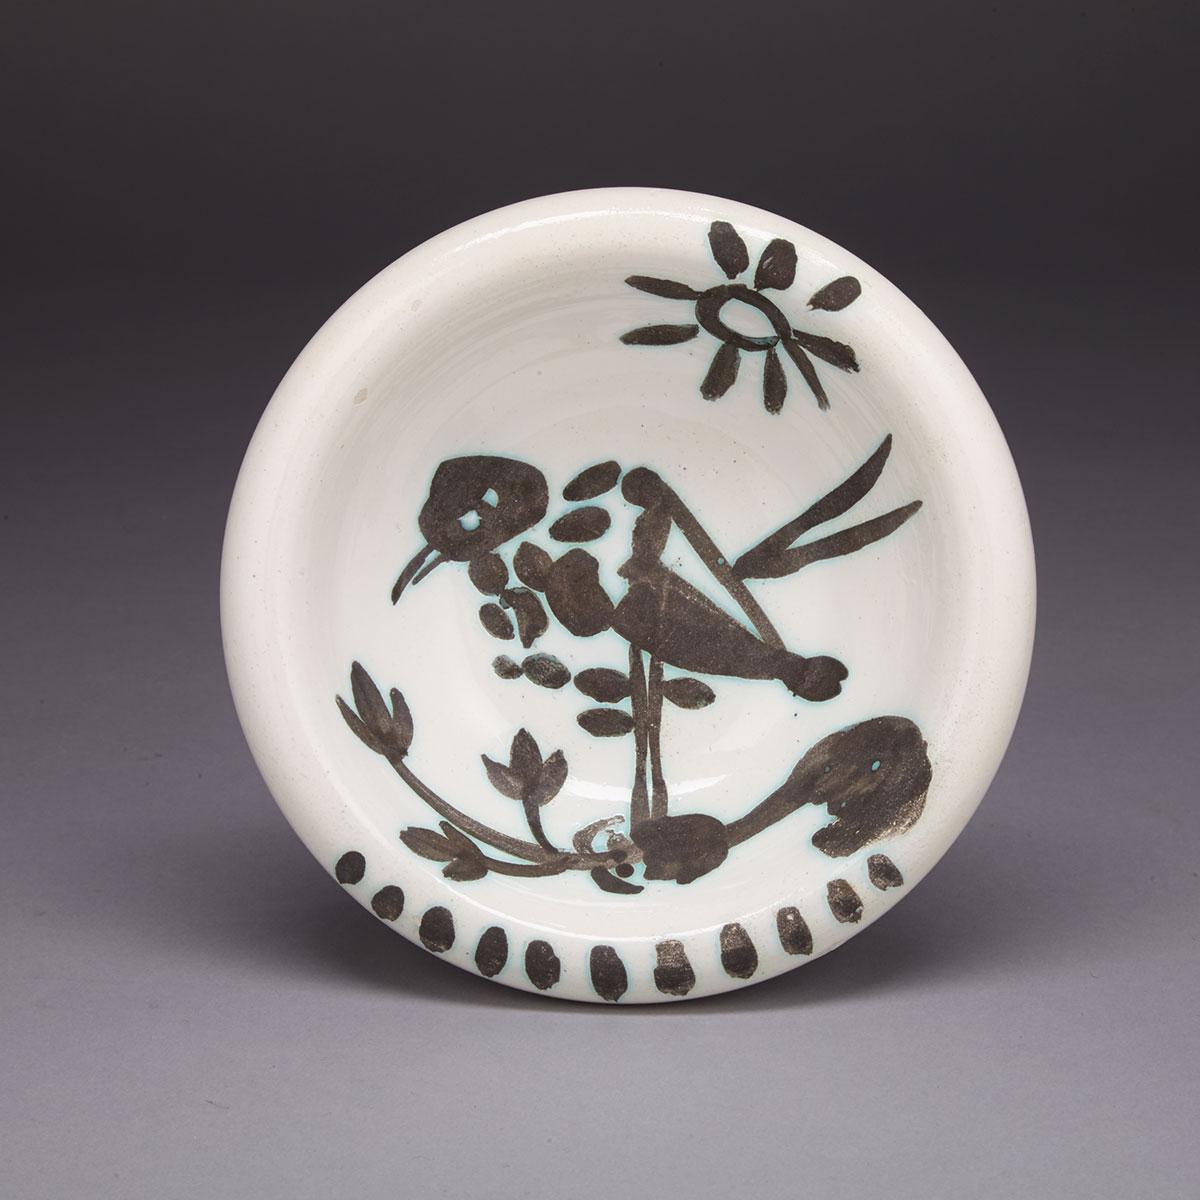 ‘Bird Under the Sun’, Pablo Picasso Small Bowl, c.1952